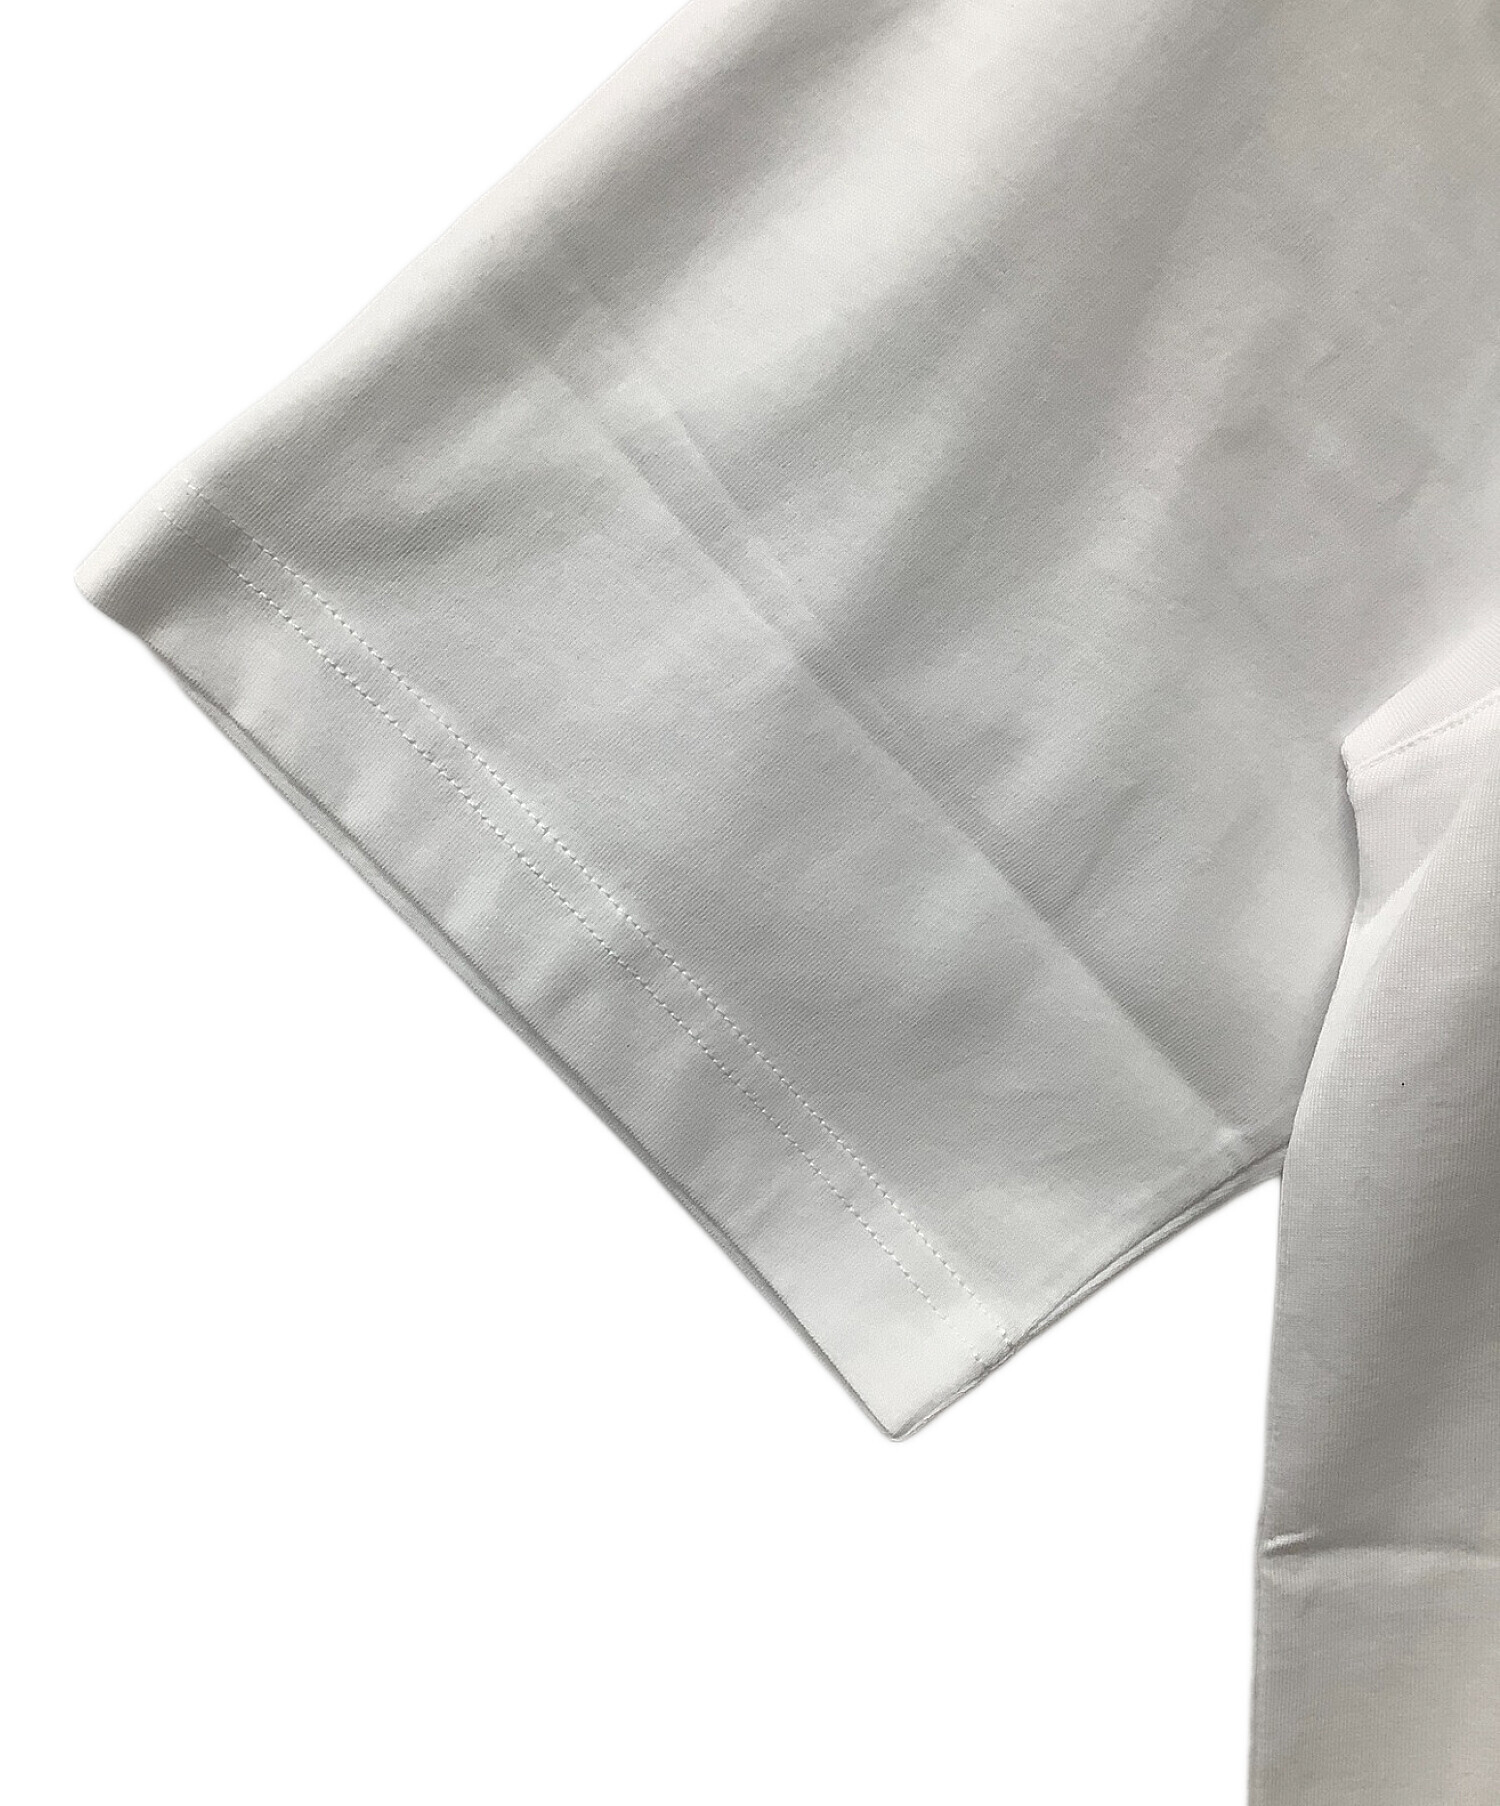 MARNI (マルニ) 半袖Tシャツ ホワイト サイズ:38